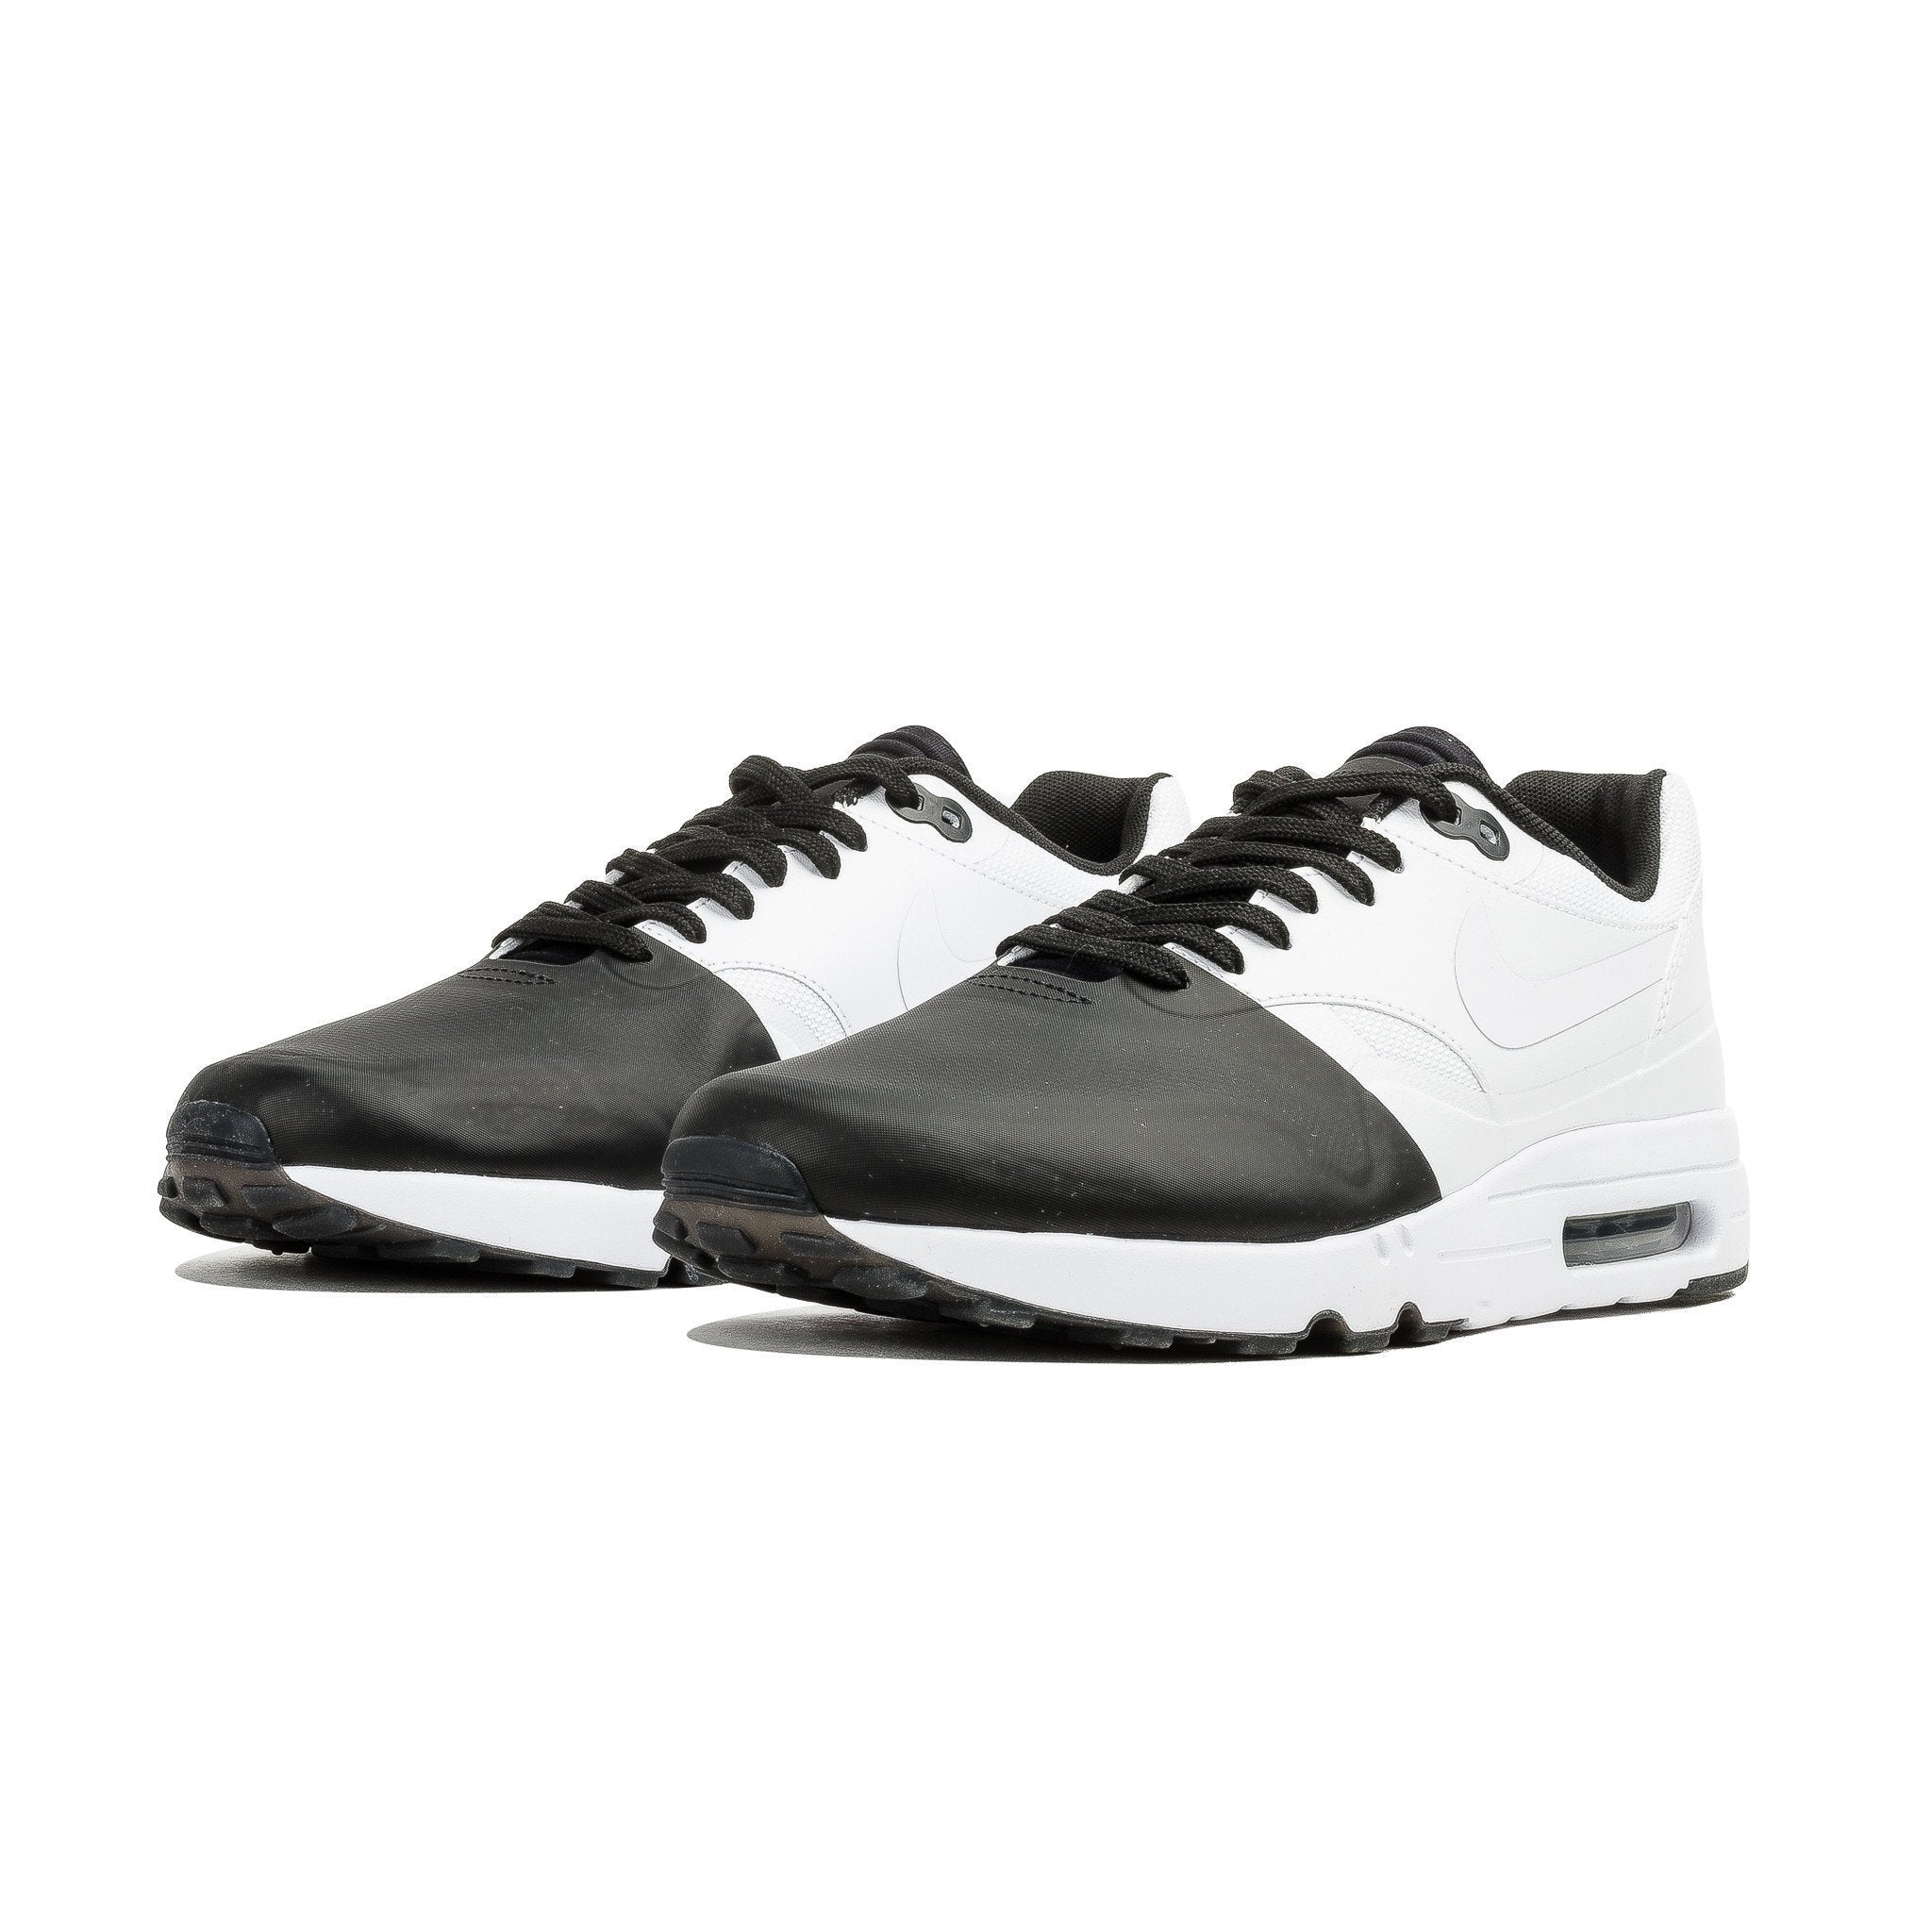 Men's Nike Air 1 Ultra 2.0 SE "White/Black" 875845 001 -